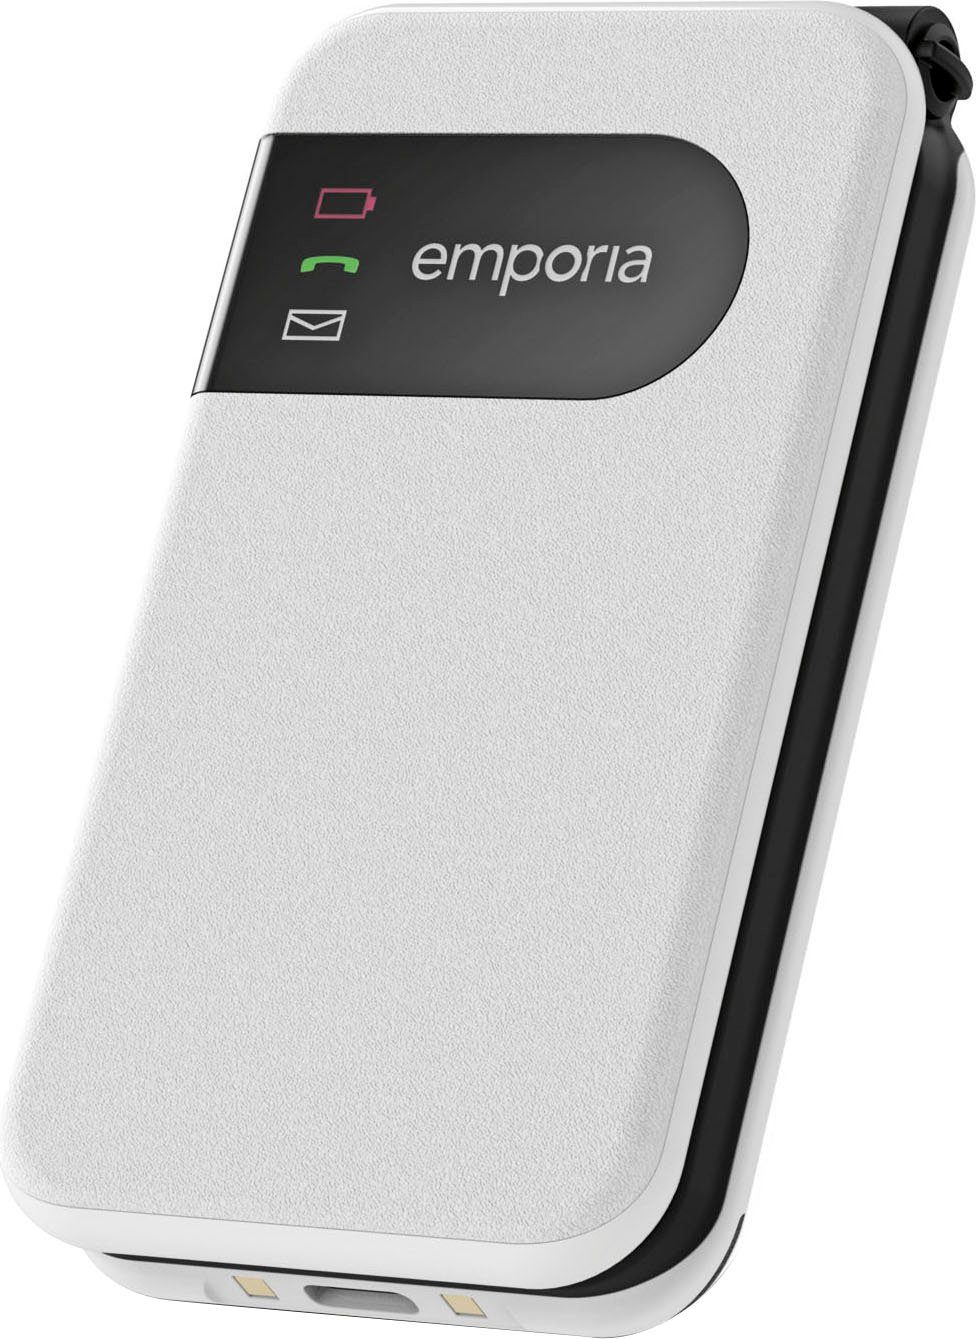 Emporia emporiaSIMPLICITYglam.4G 0,12 Klapphandy cm/2,8 (7,11 GB Speicherplatz) Zoll